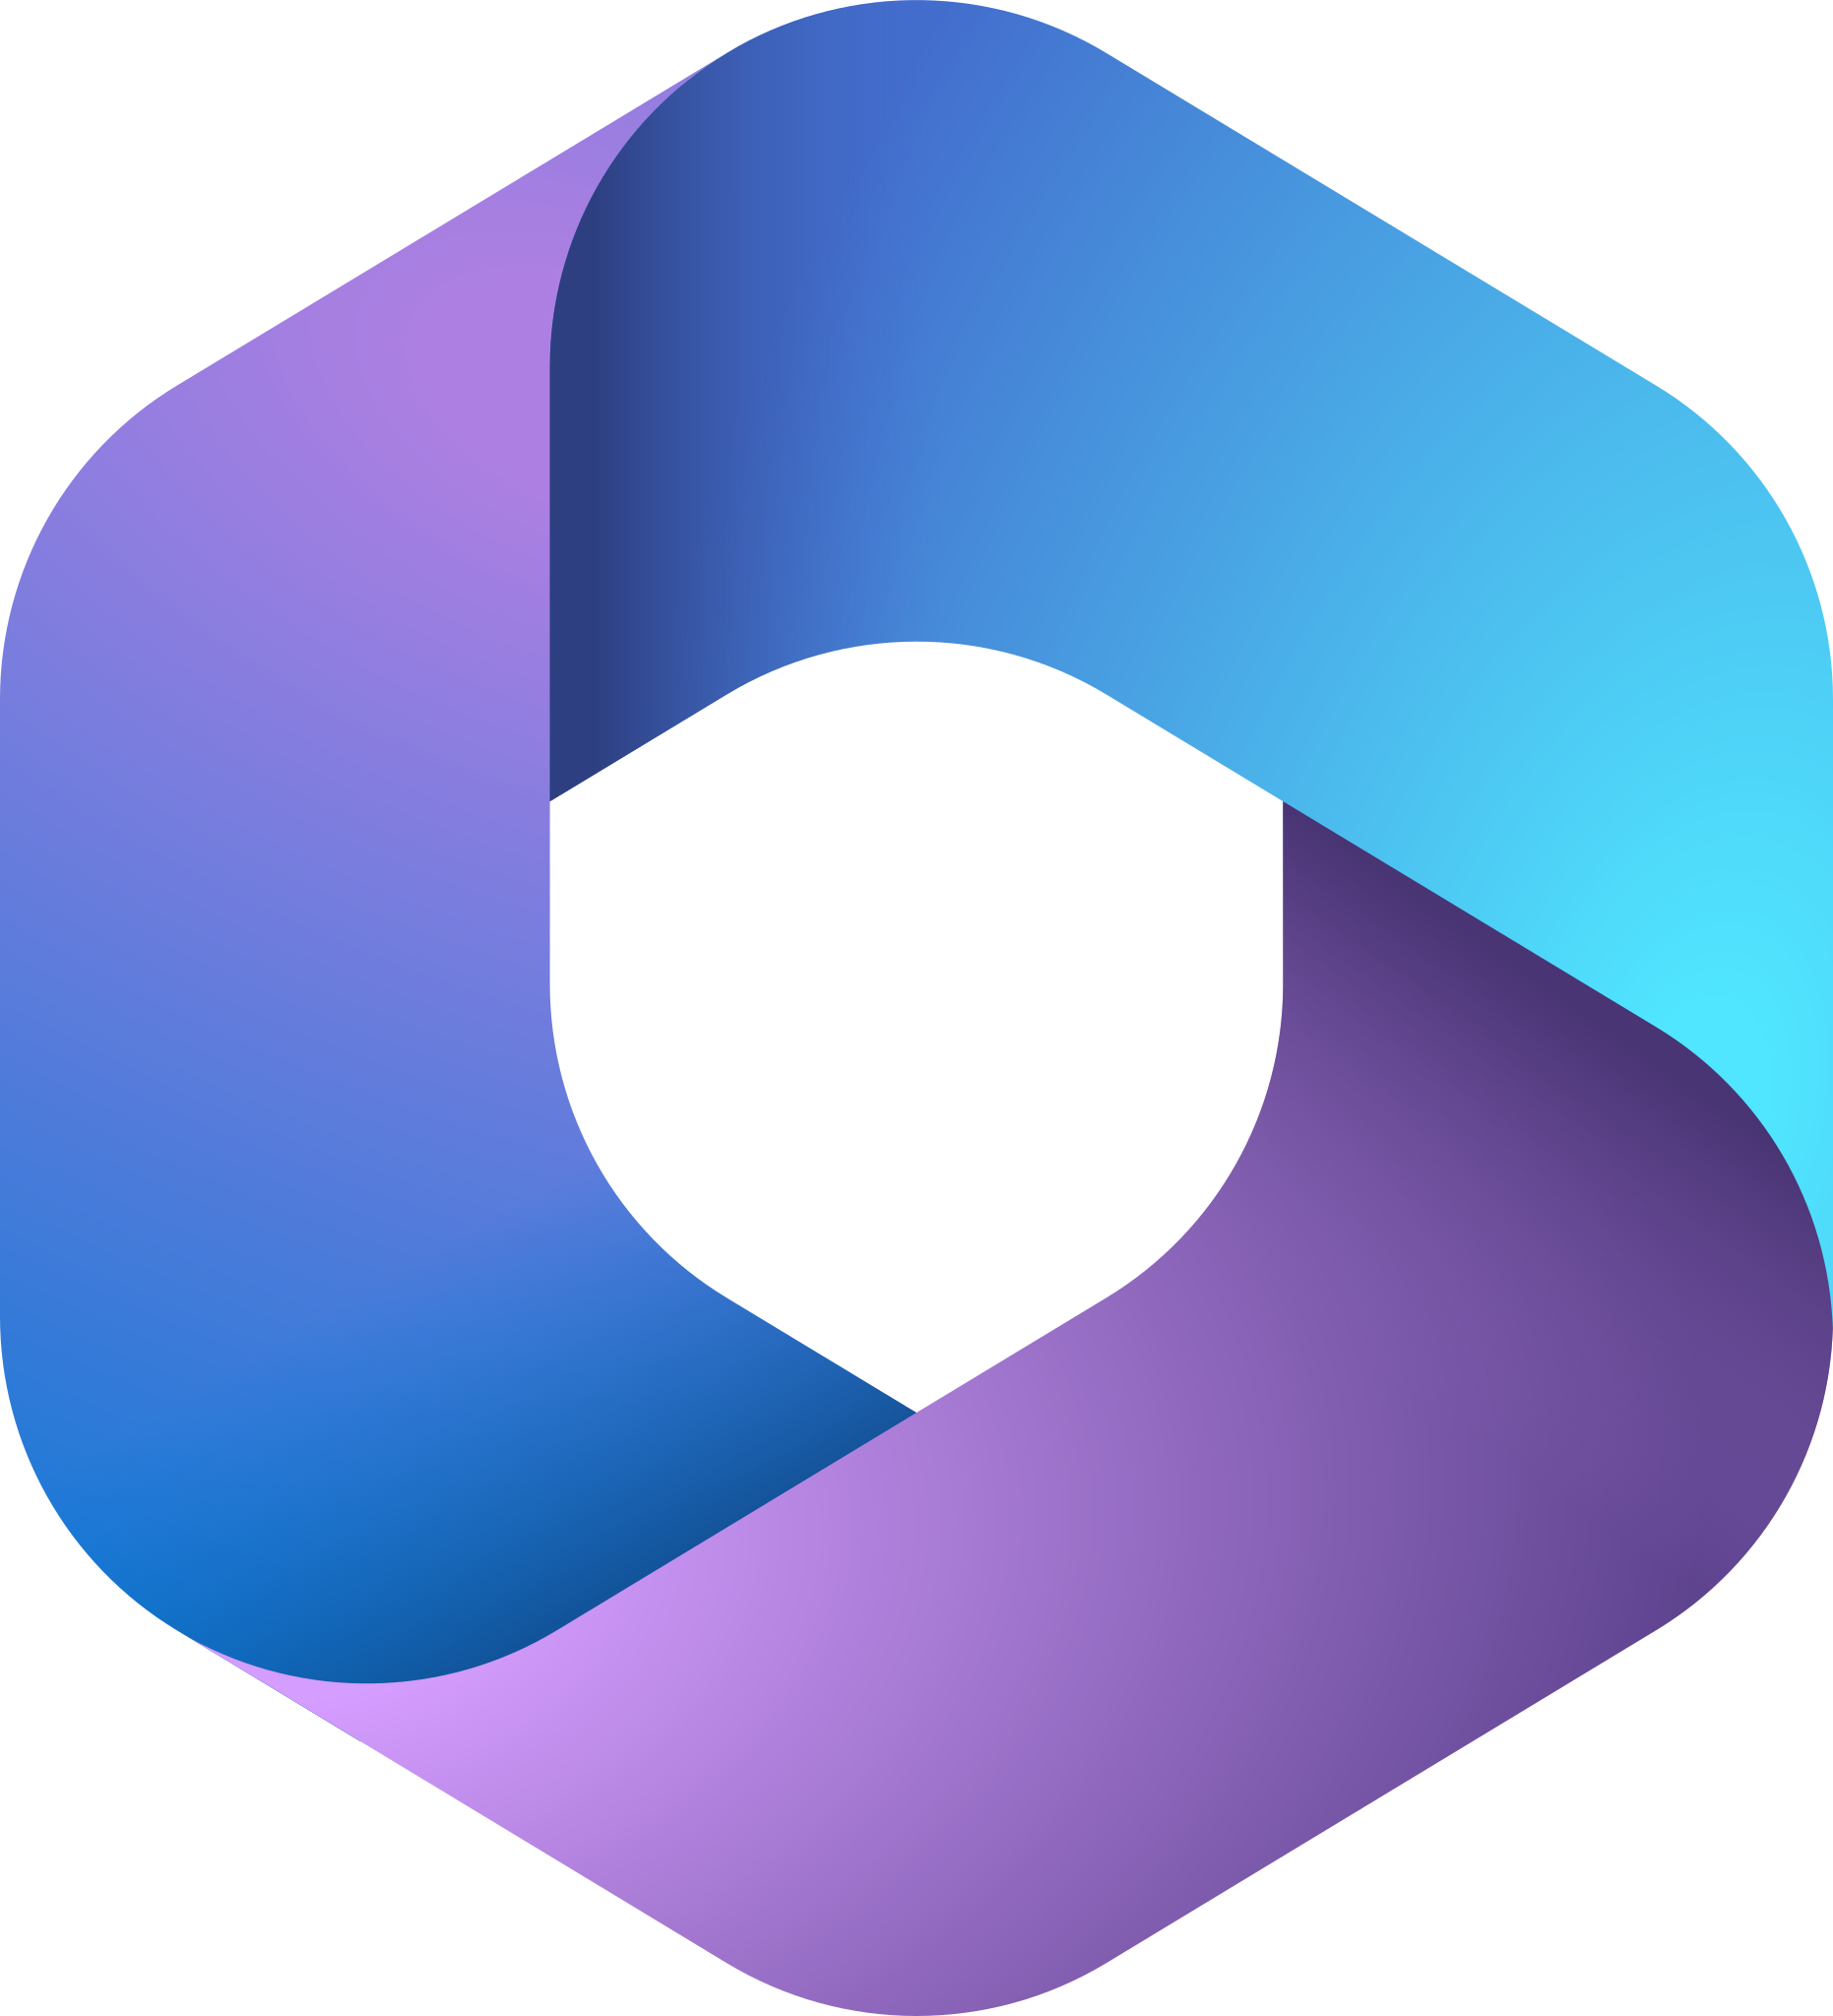 File:Microsoft Power Platform logo.svg - Wikipedia